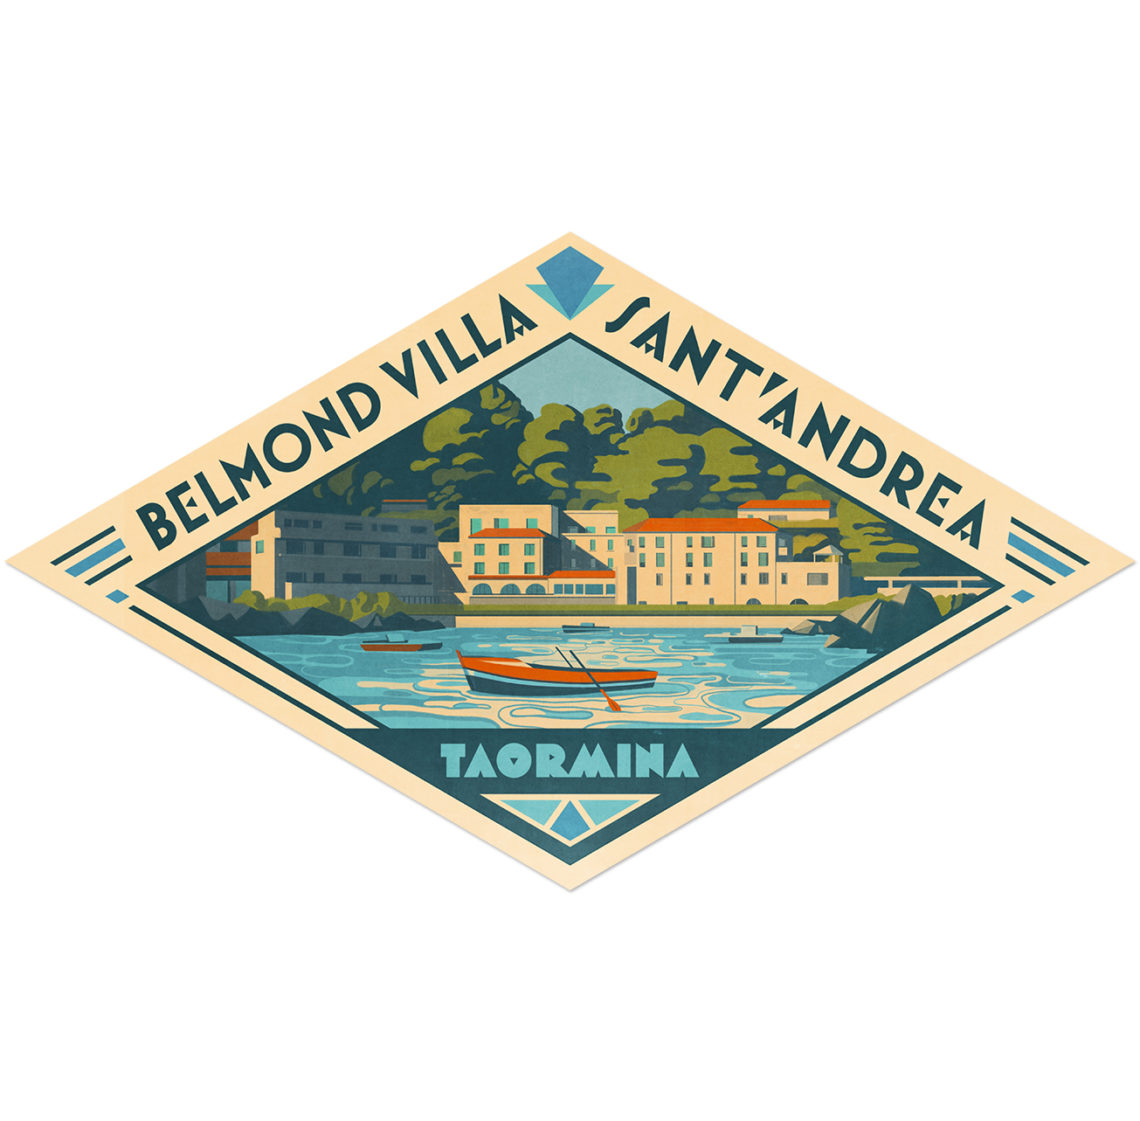 Belmond sticker Villa Sant'Andrea Taormina